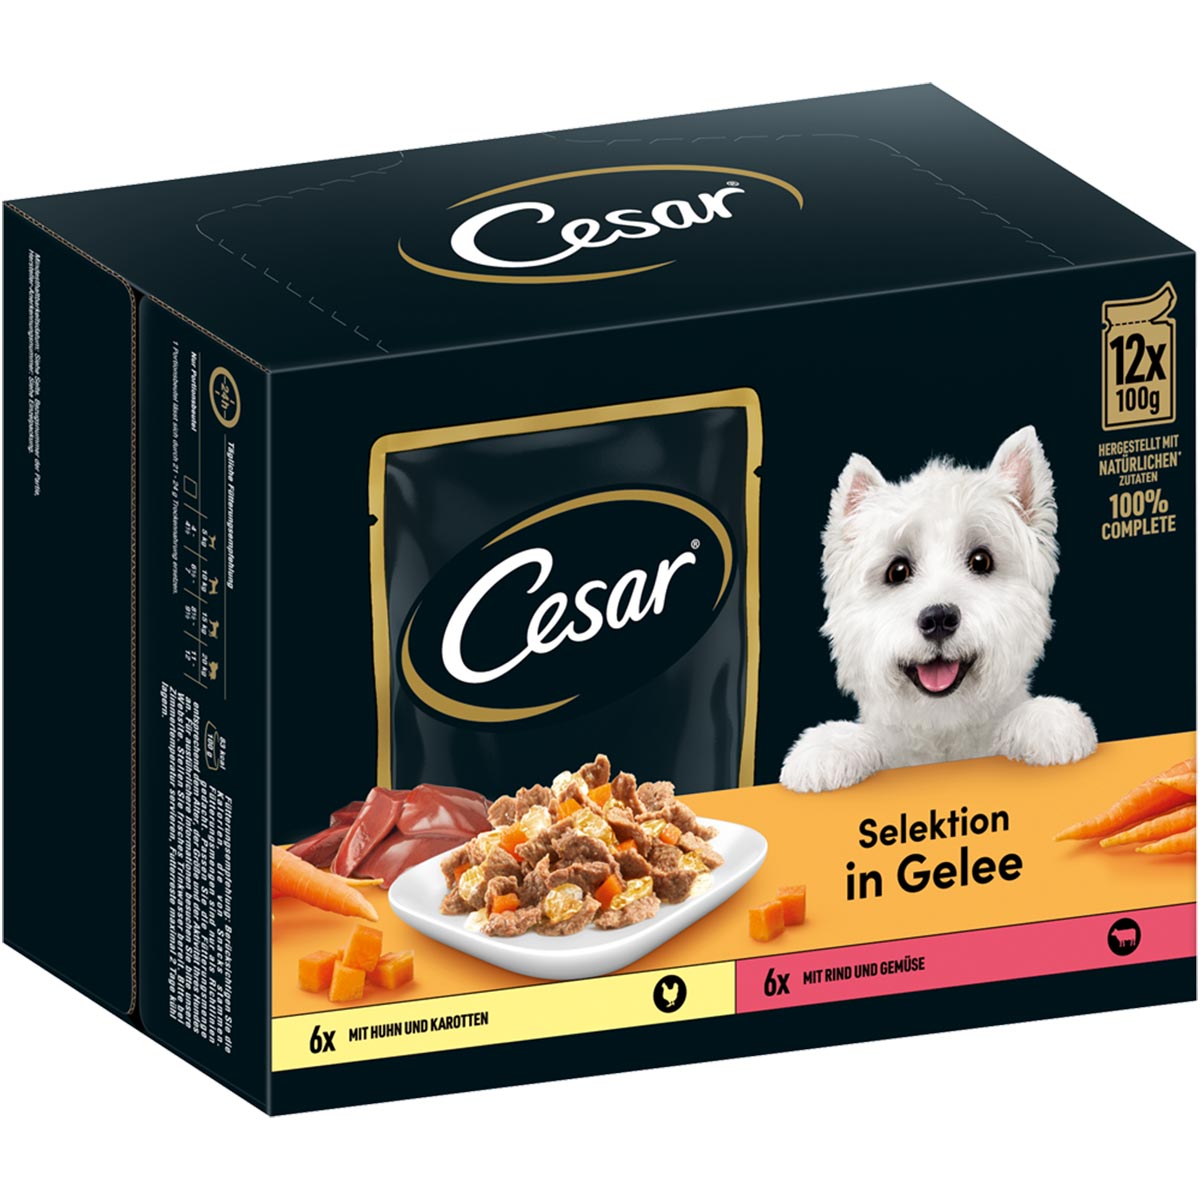 CESAR Selektion Gelee Huhn, Rind, Gemüse 12x100g von Cesar